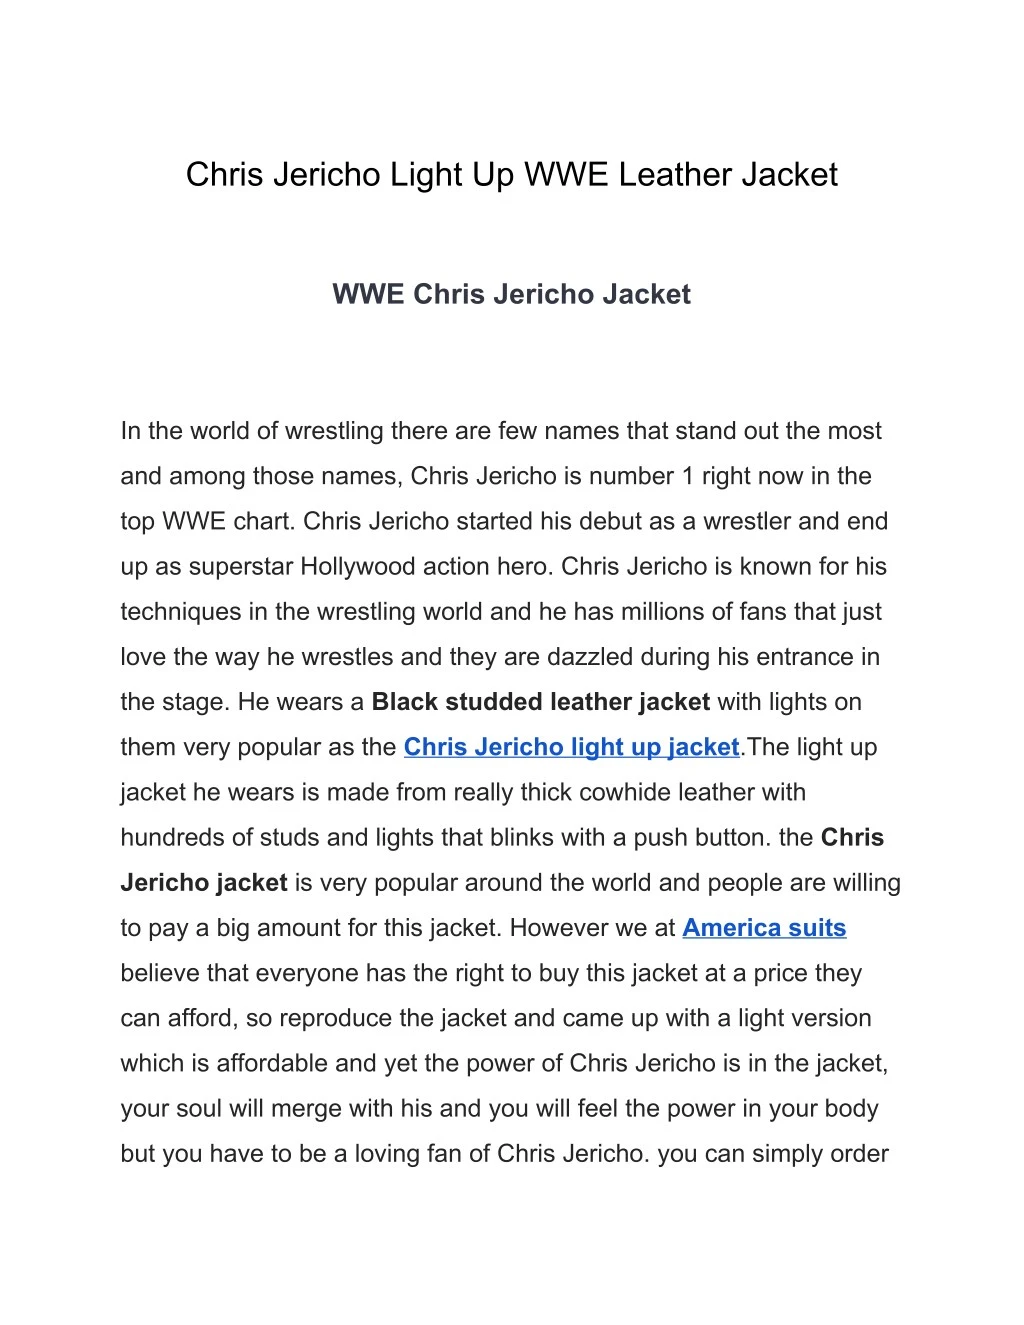 chris jericho light up wwe leather jacket